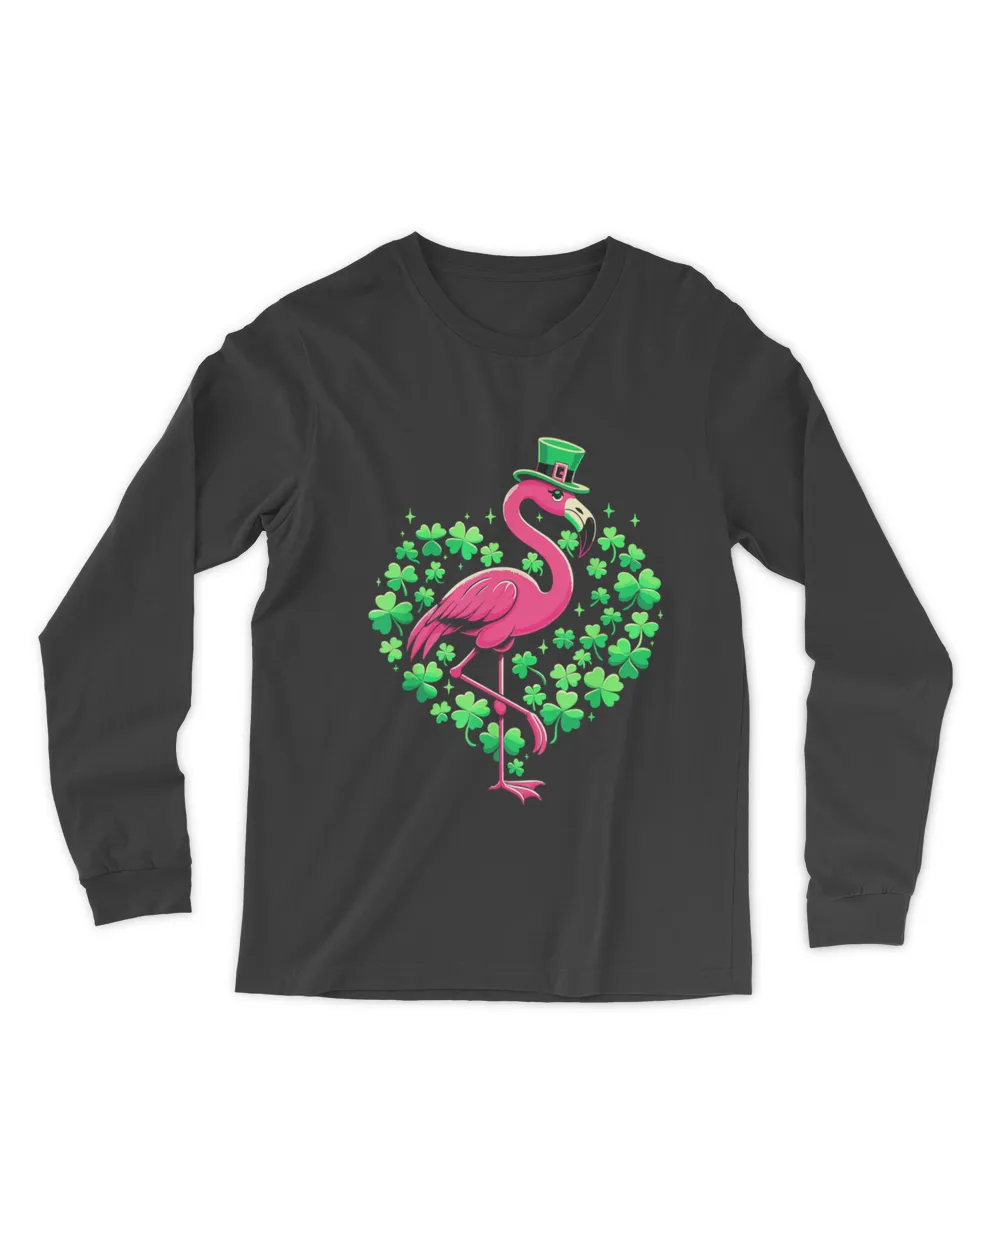 St Patricks Day Irish Flamingo T-Shirt